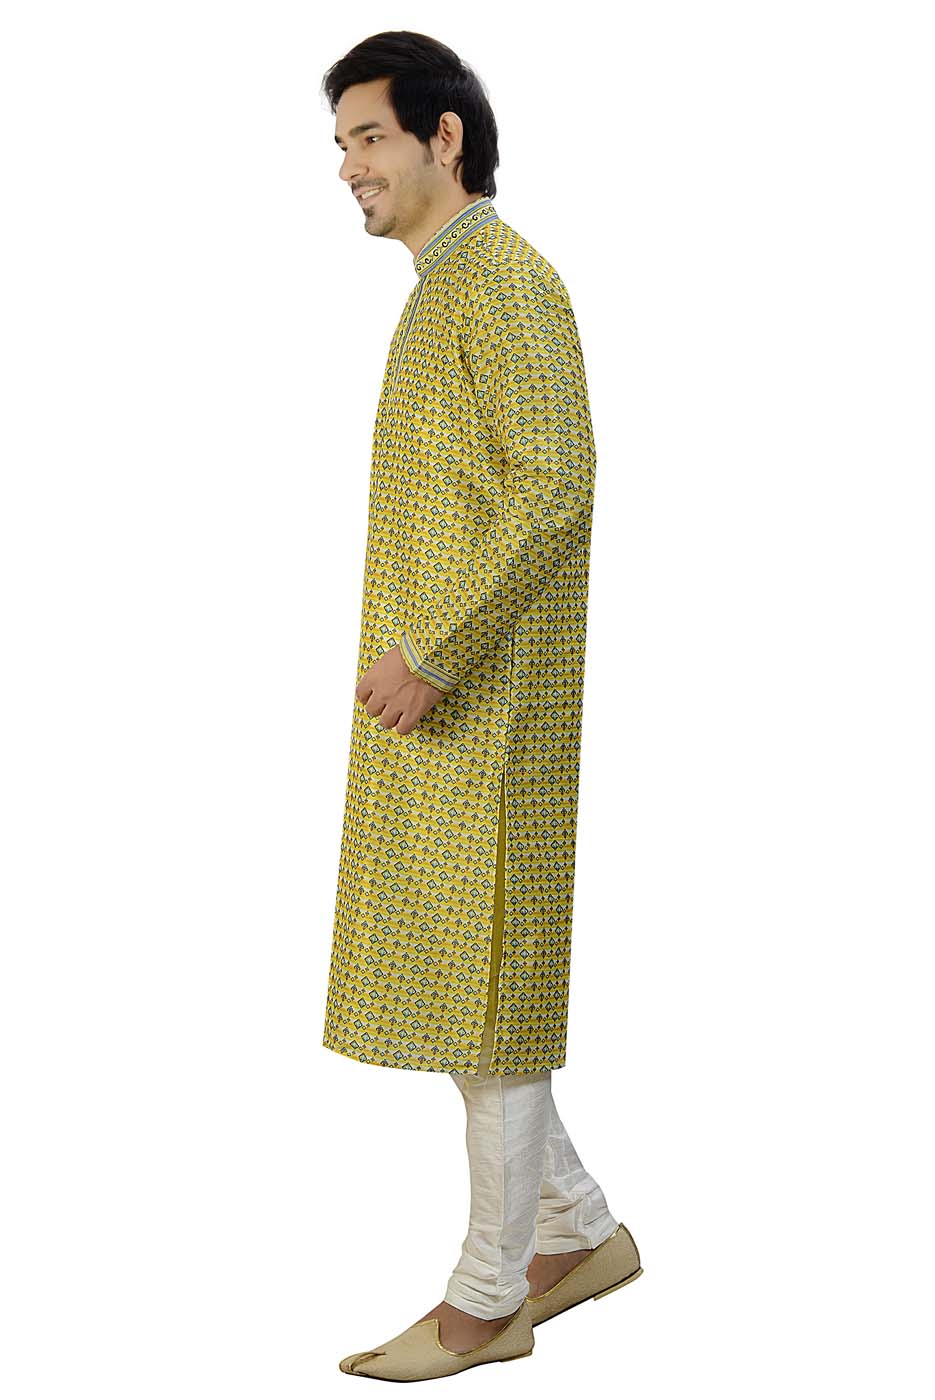 Digital Print Silk Kurta Suit With Resham Thread Work On Neck Line - Mustard